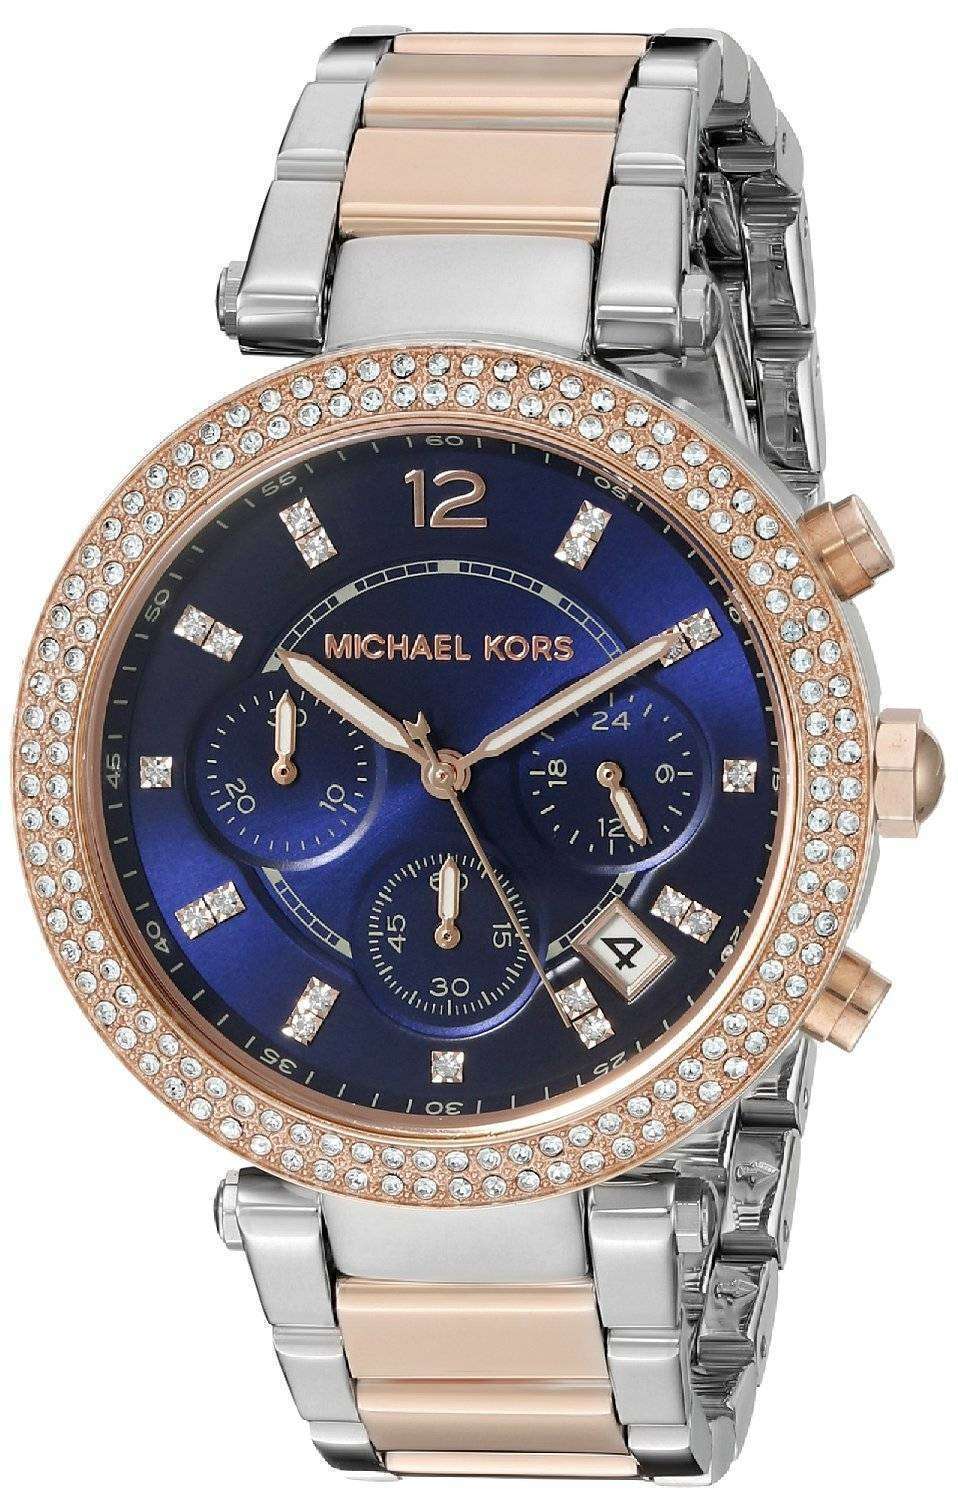 Michael Kors MK6141 Luxury Ladies Parker Rose Gold Wrist Watch 39mm on OnBuy